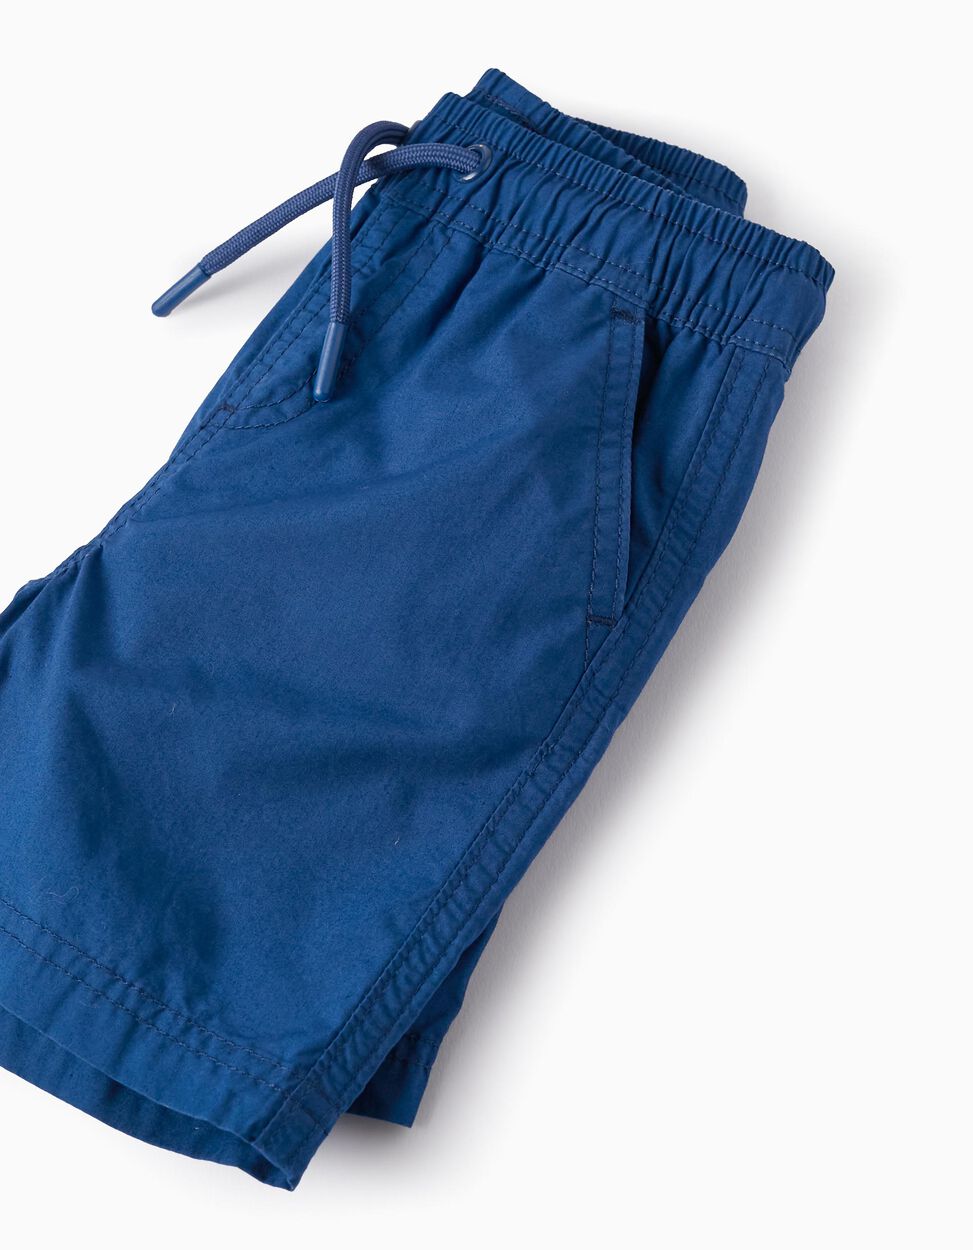 Buy Online Poplin Shorts for Baby Boys, Dark Blue